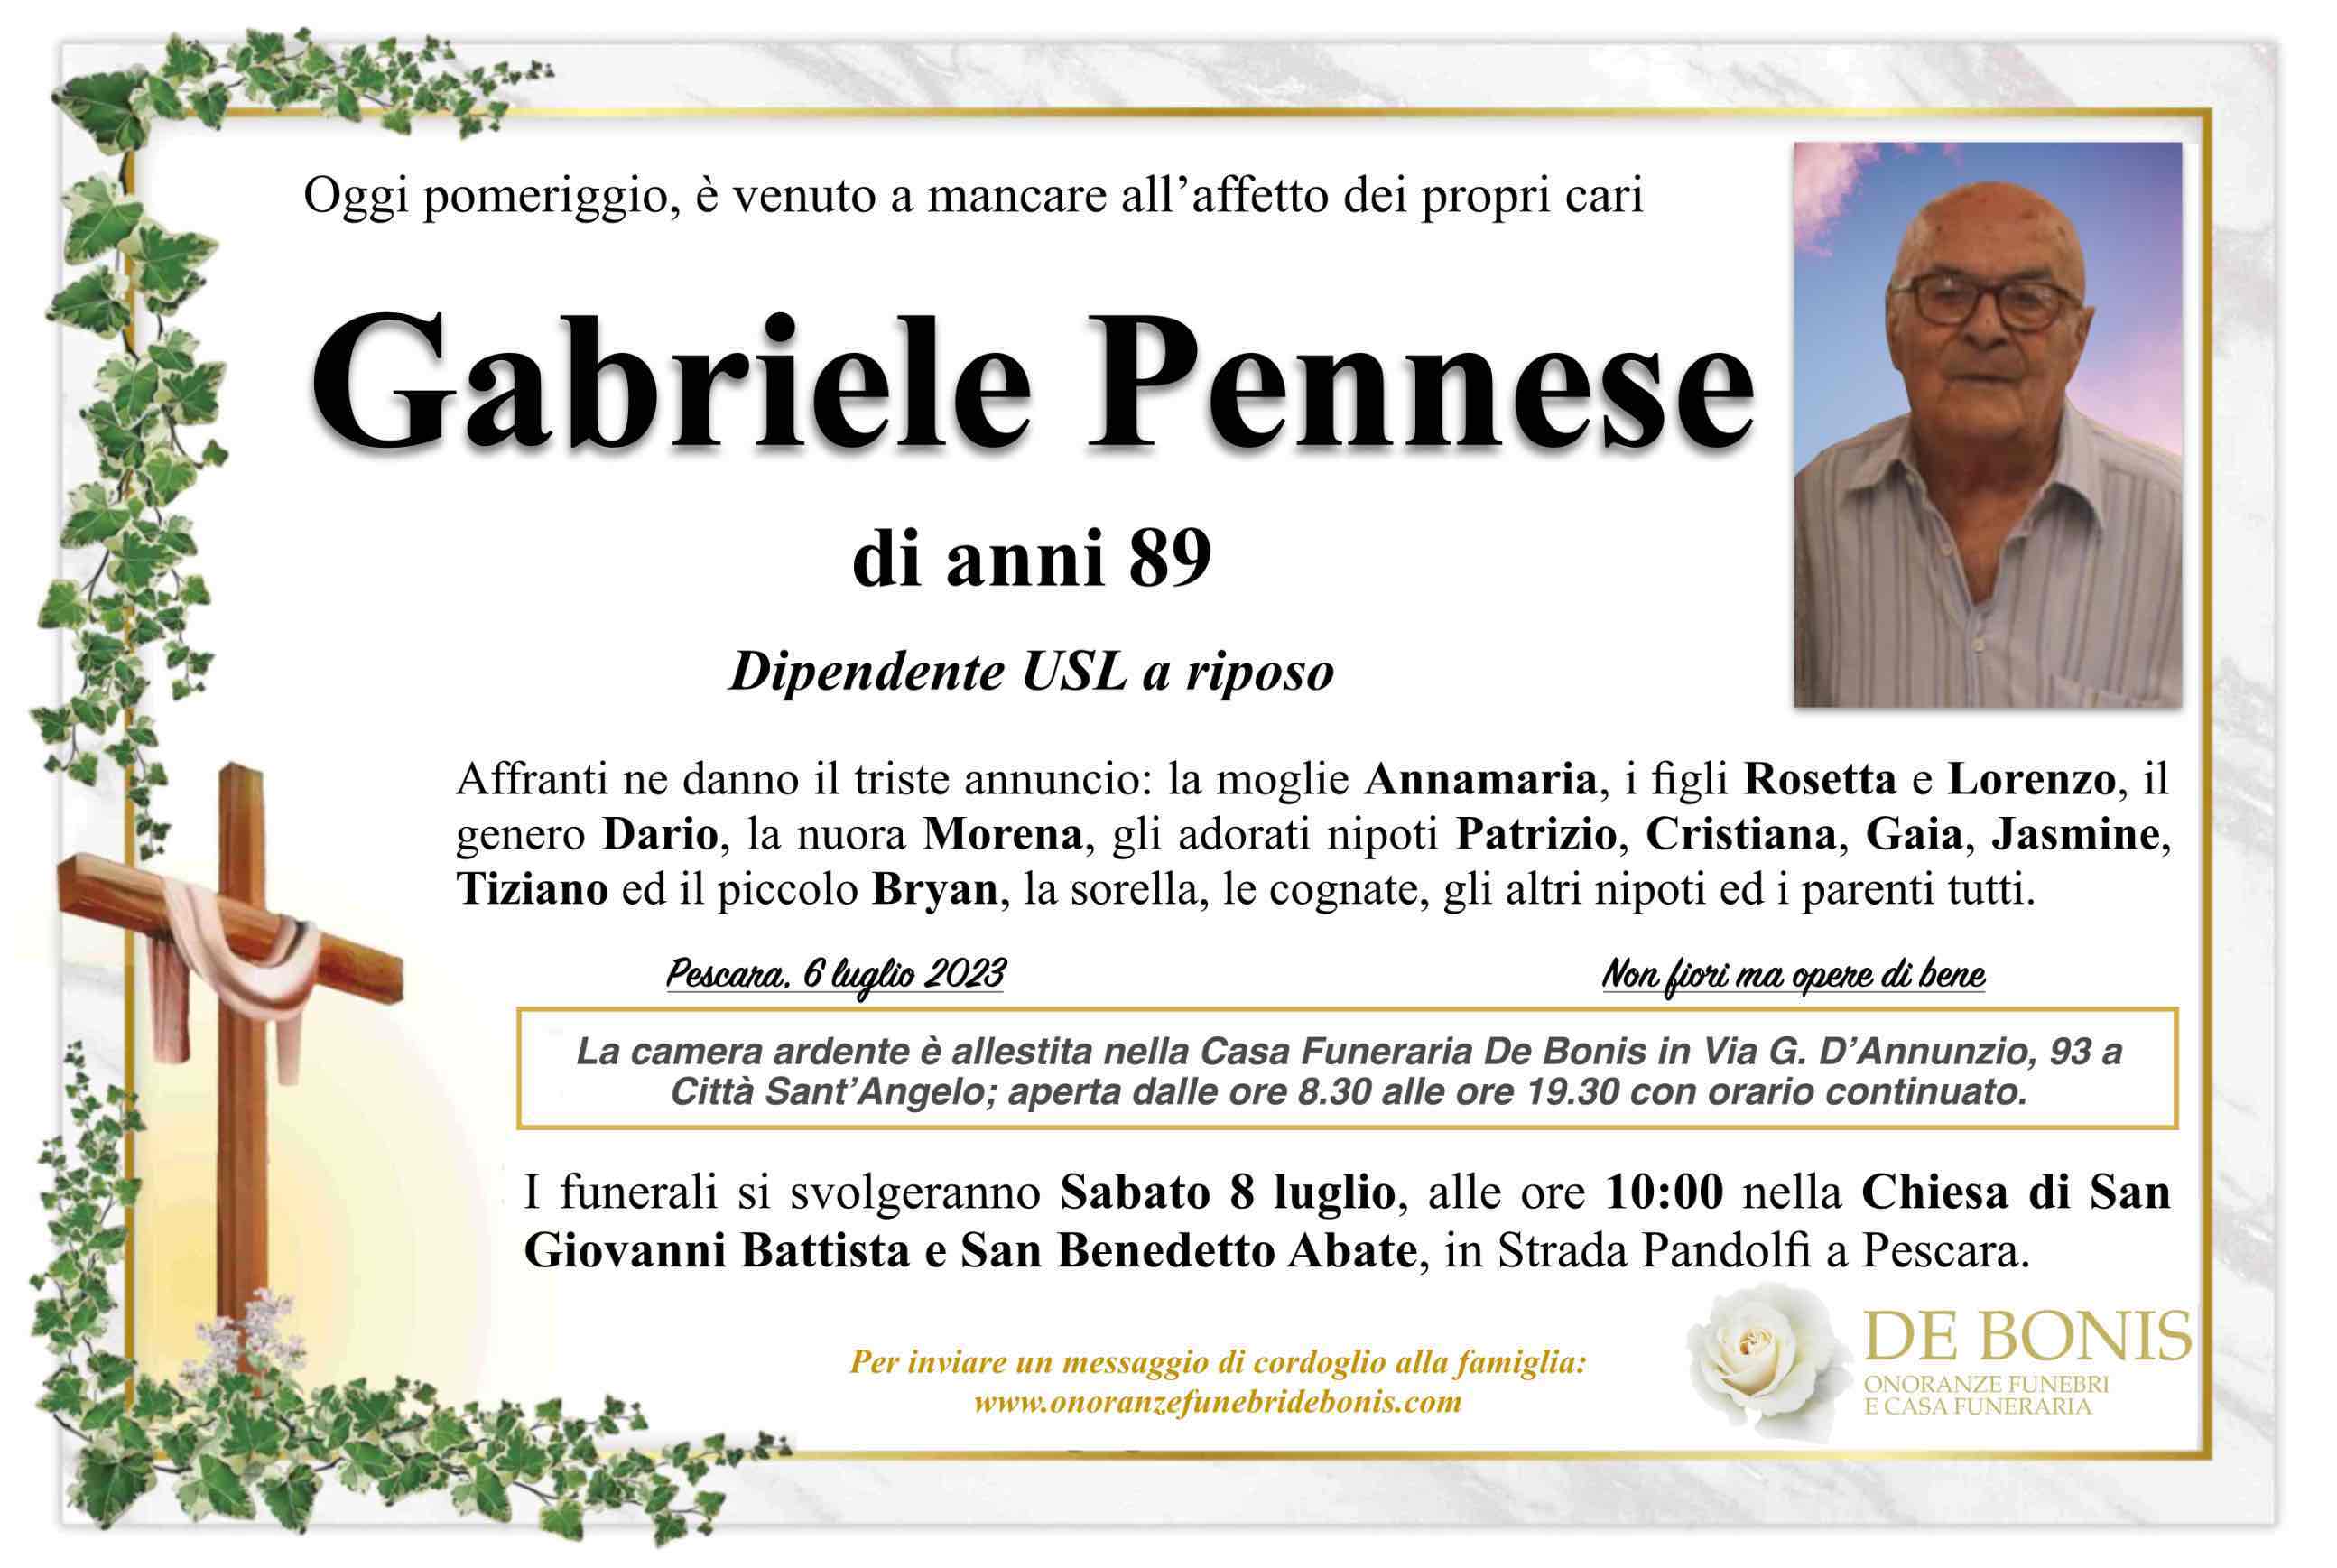 Gabriele Pennese